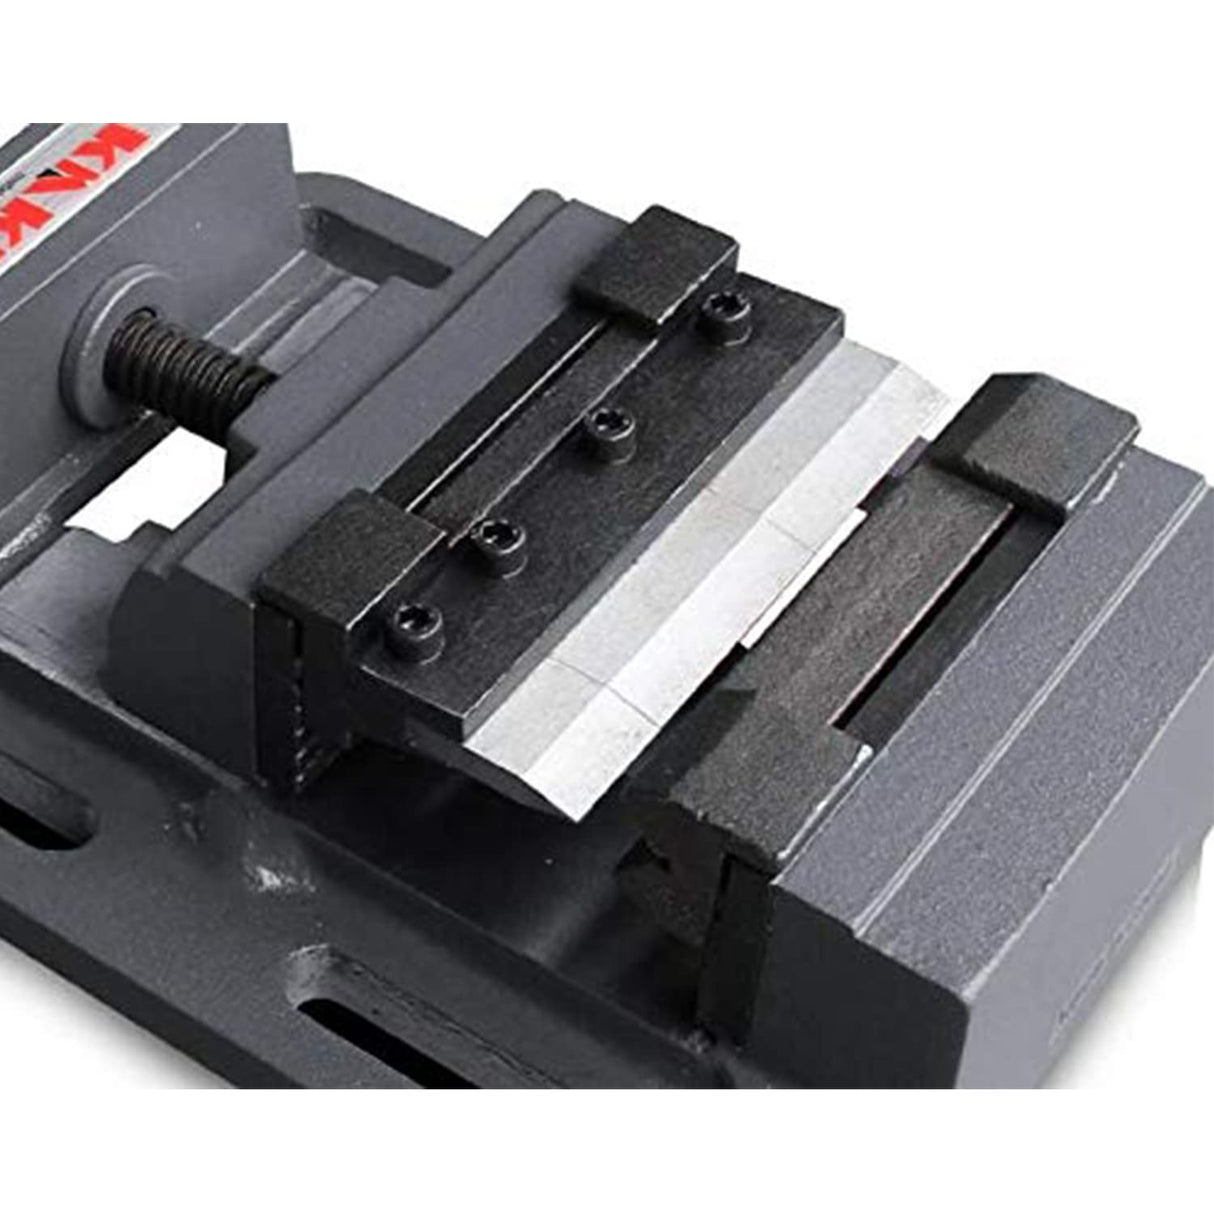 KANG Industrial BSM125 Drill Press Machine Vise, 125mm Precise Drilling Press Vise